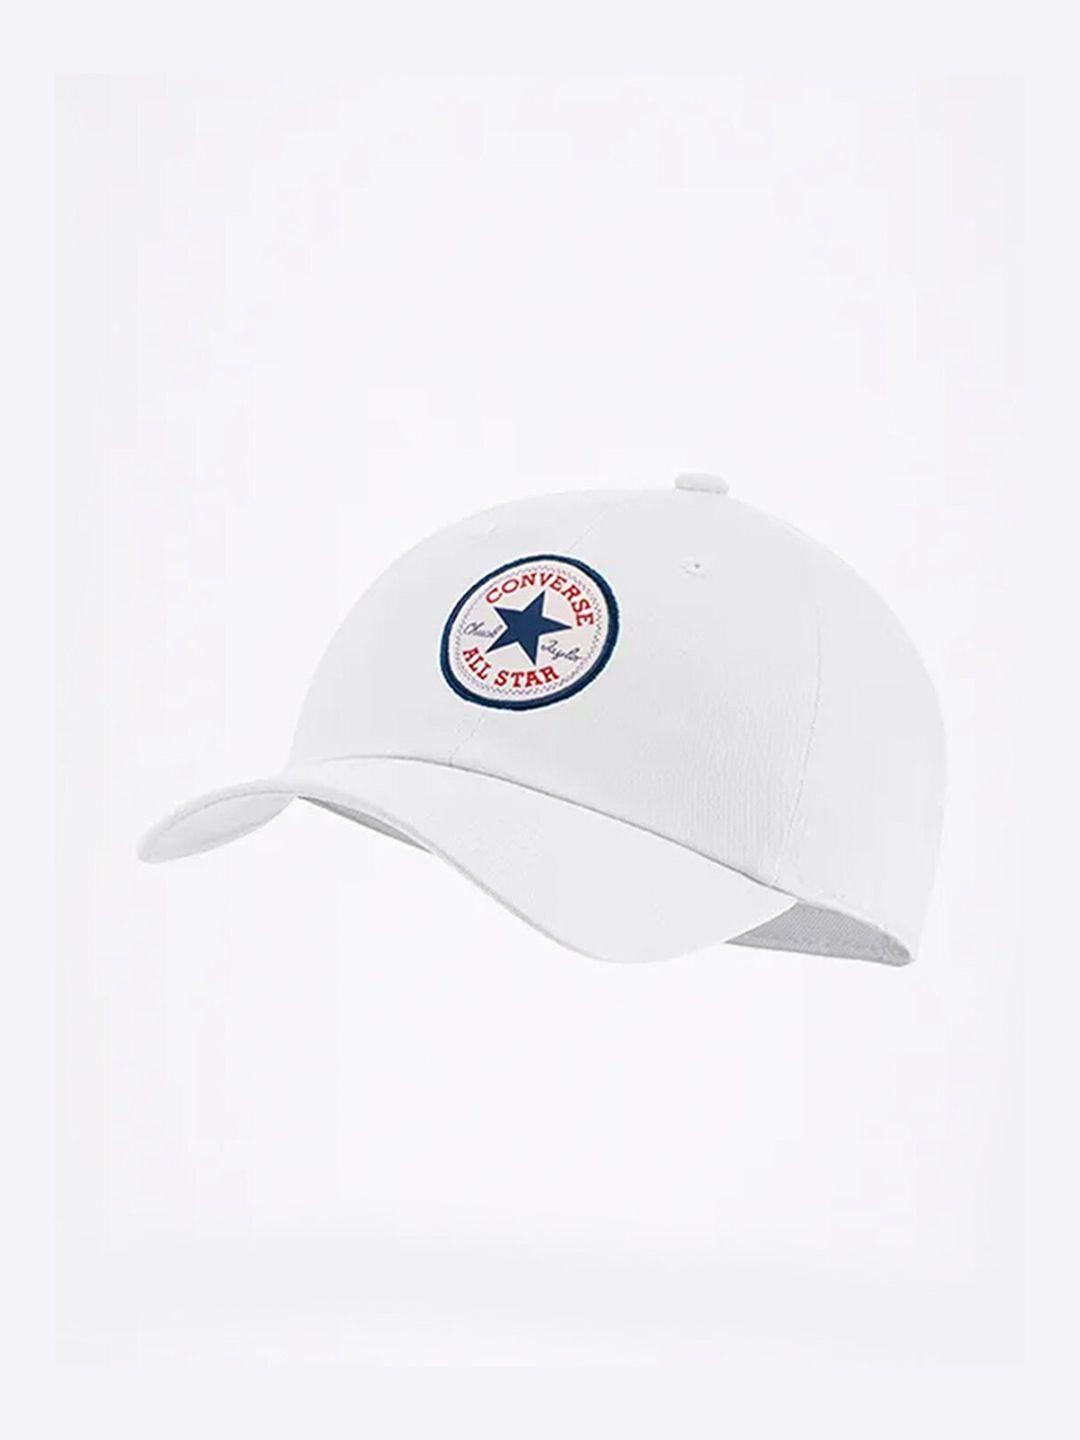 converse unisex printed baseball cap